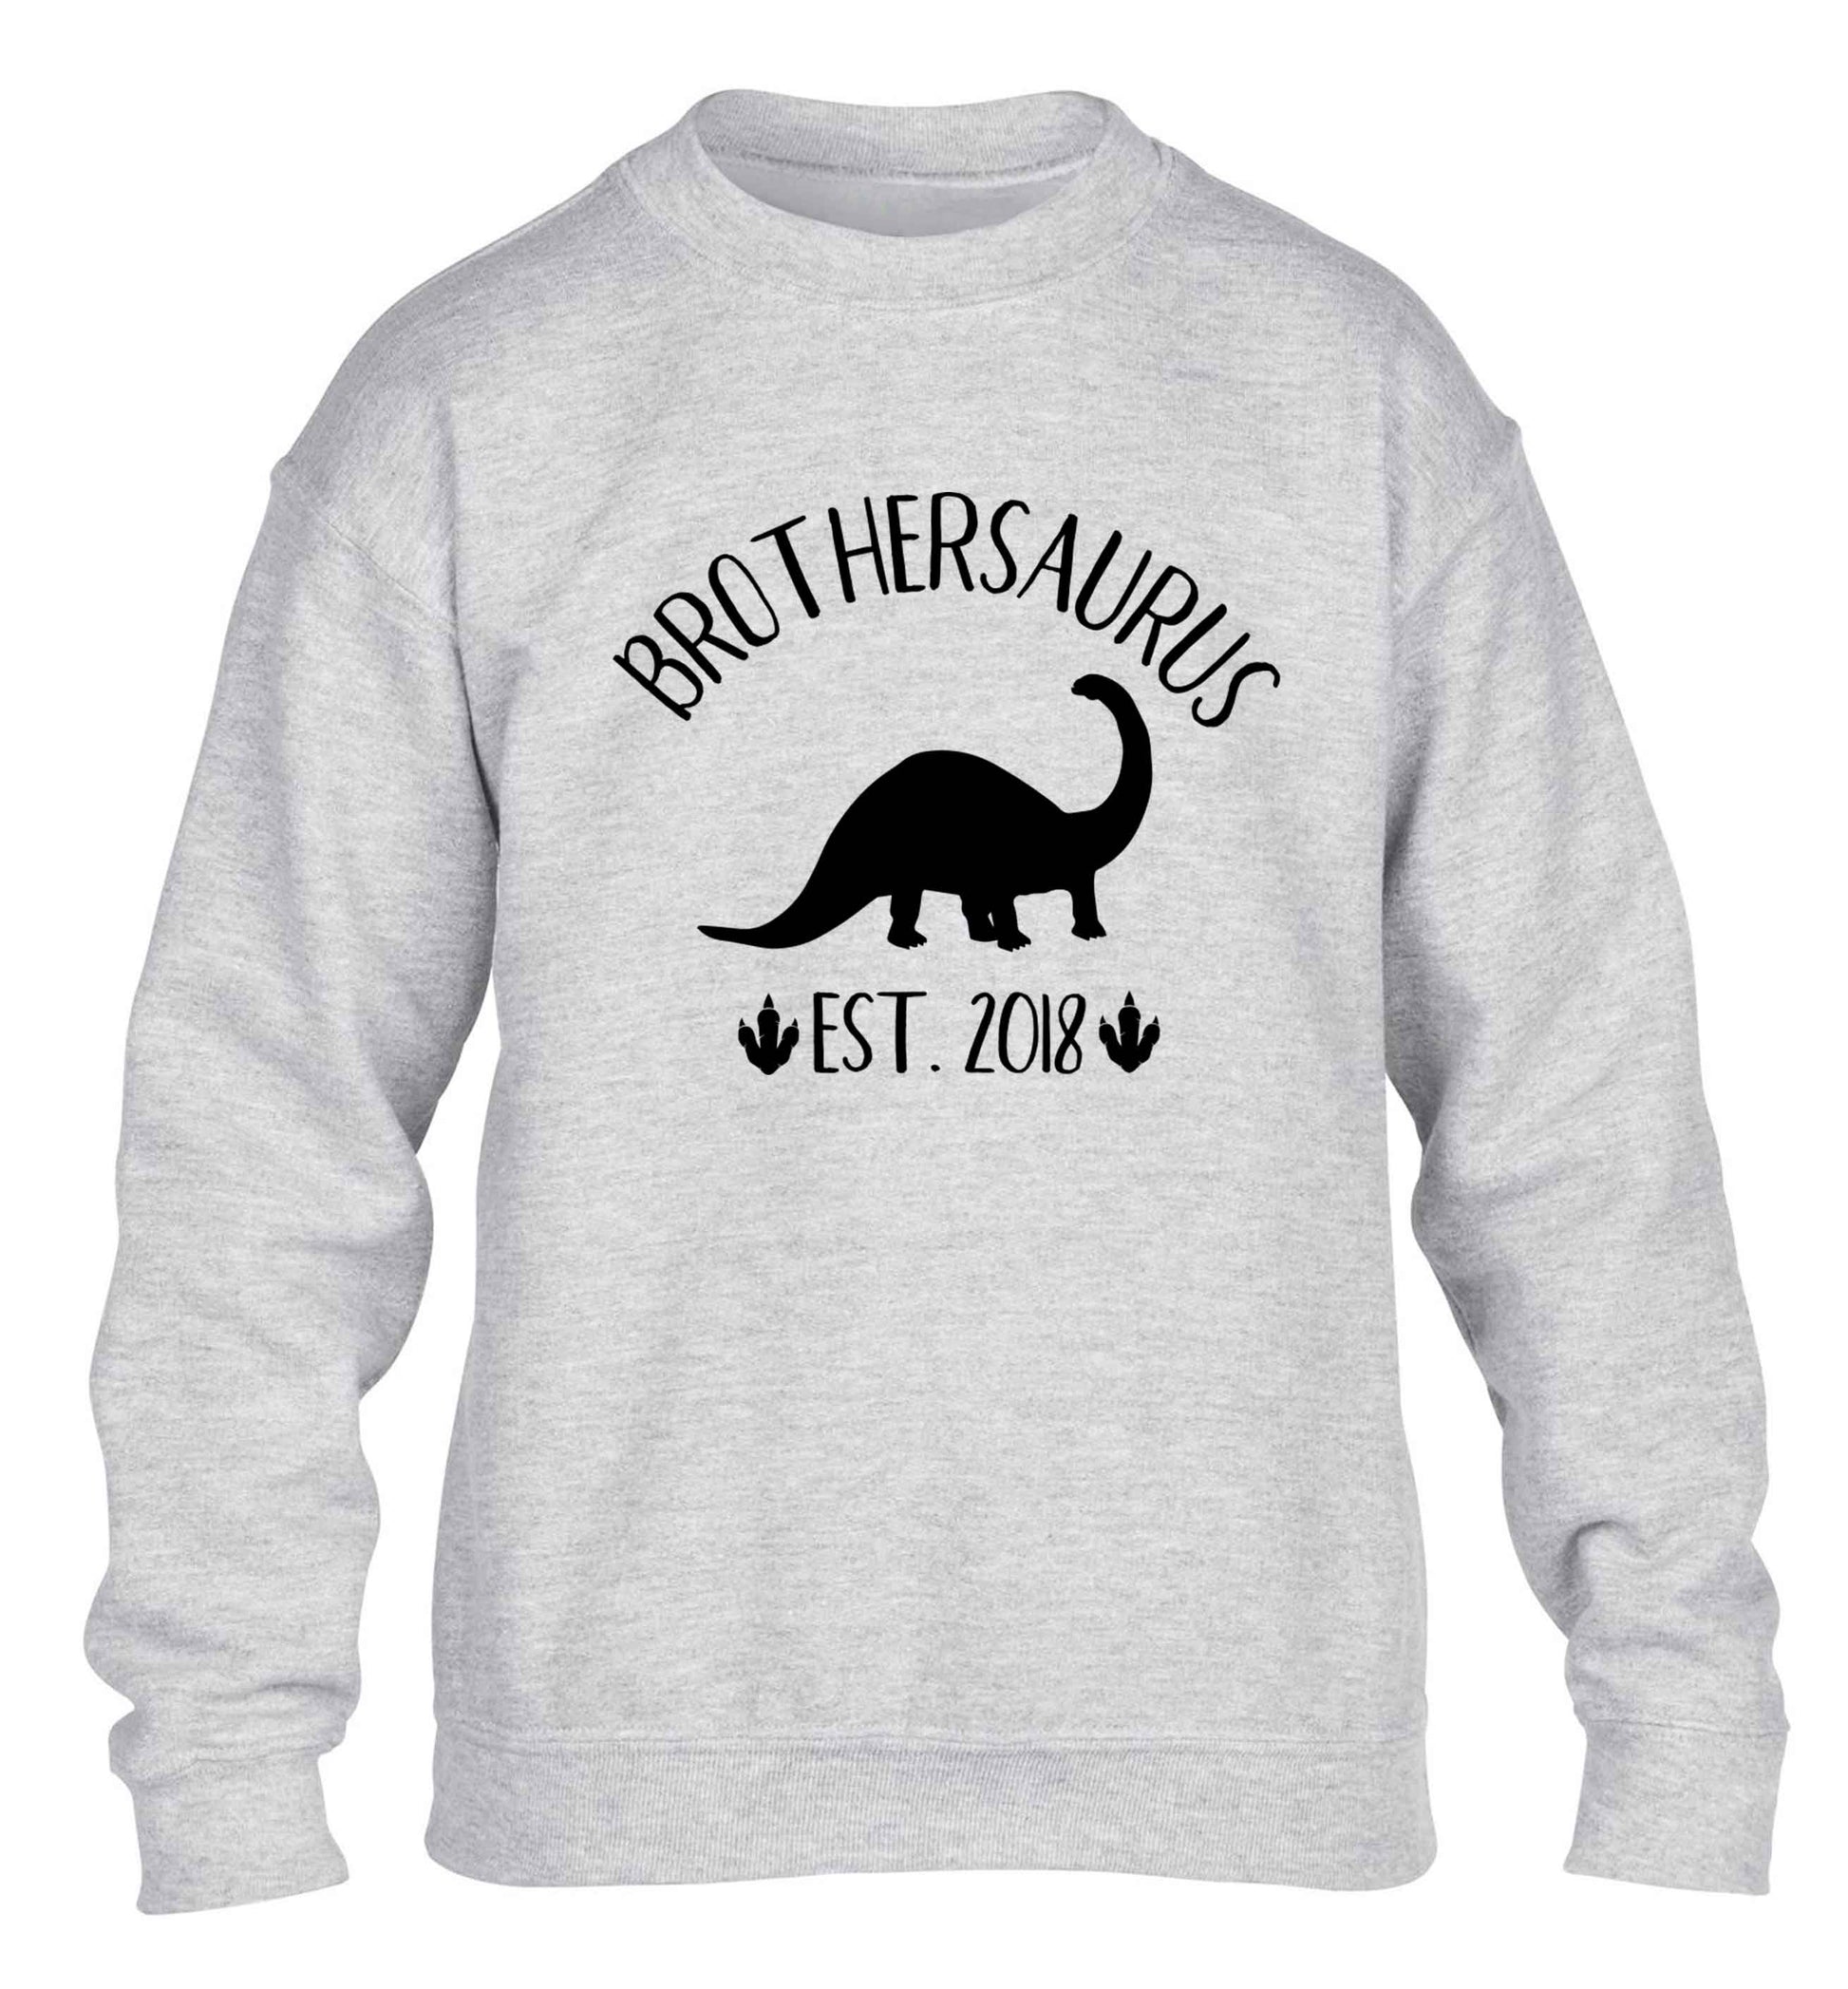 Personalised brothersaurus since (custom date) children's grey sweater 12-13 Years